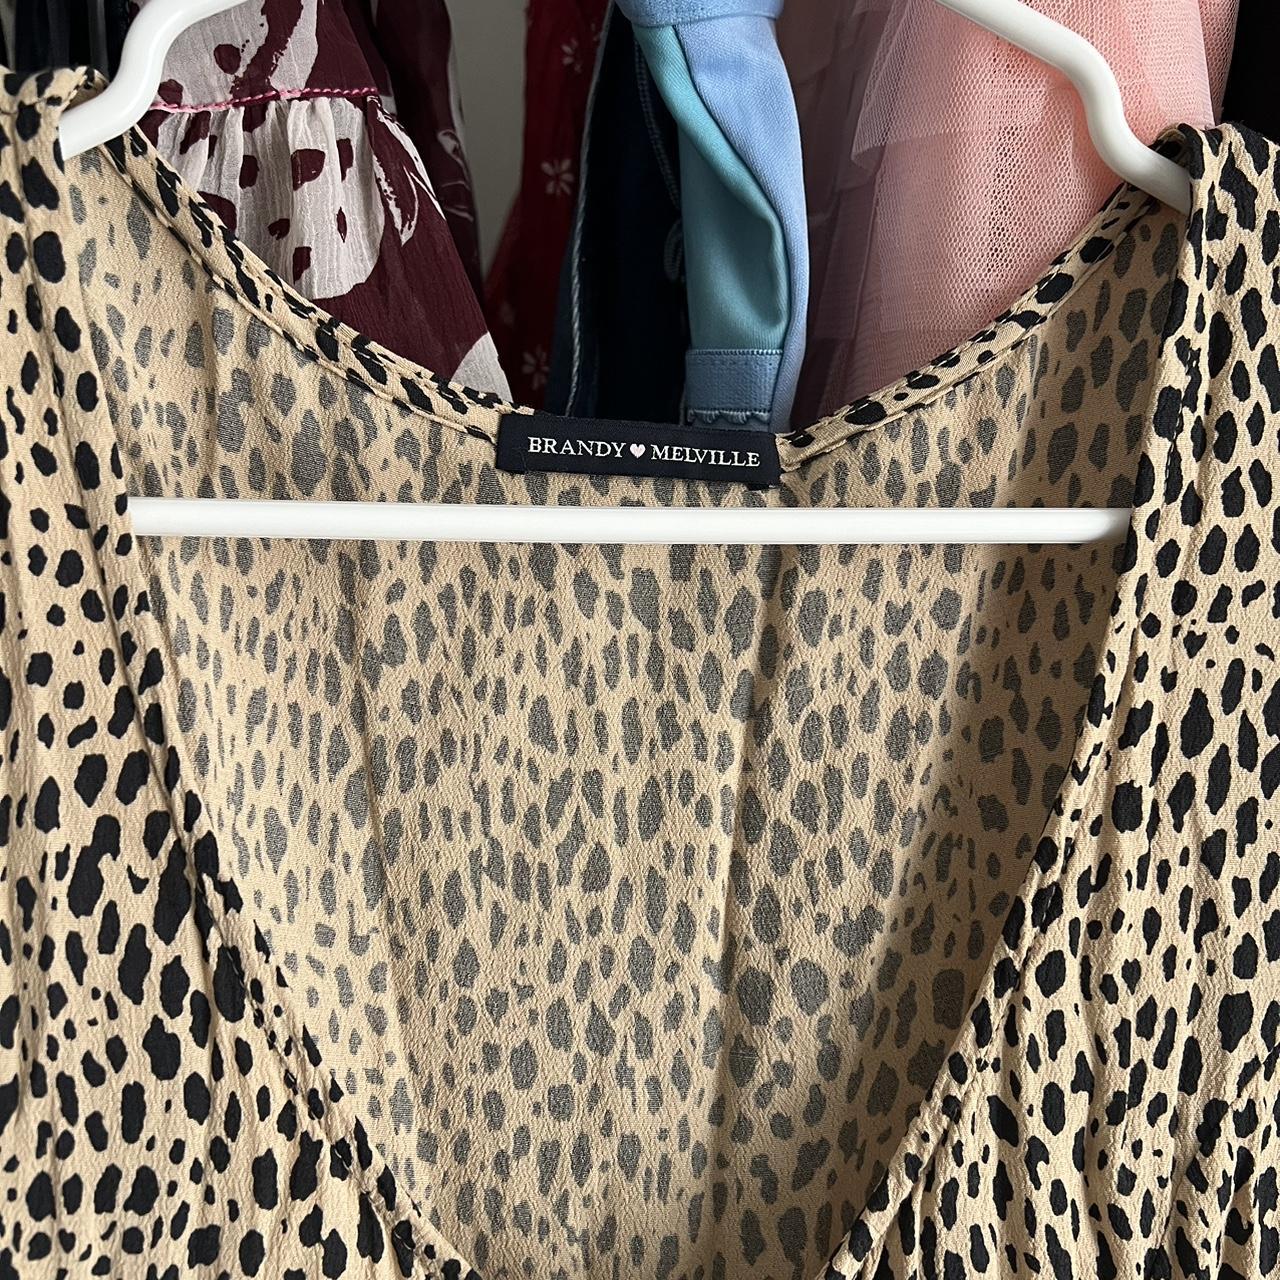 Brandy Melville BRANDY MELVILLE Cheetah Wrap Dress in Size Small